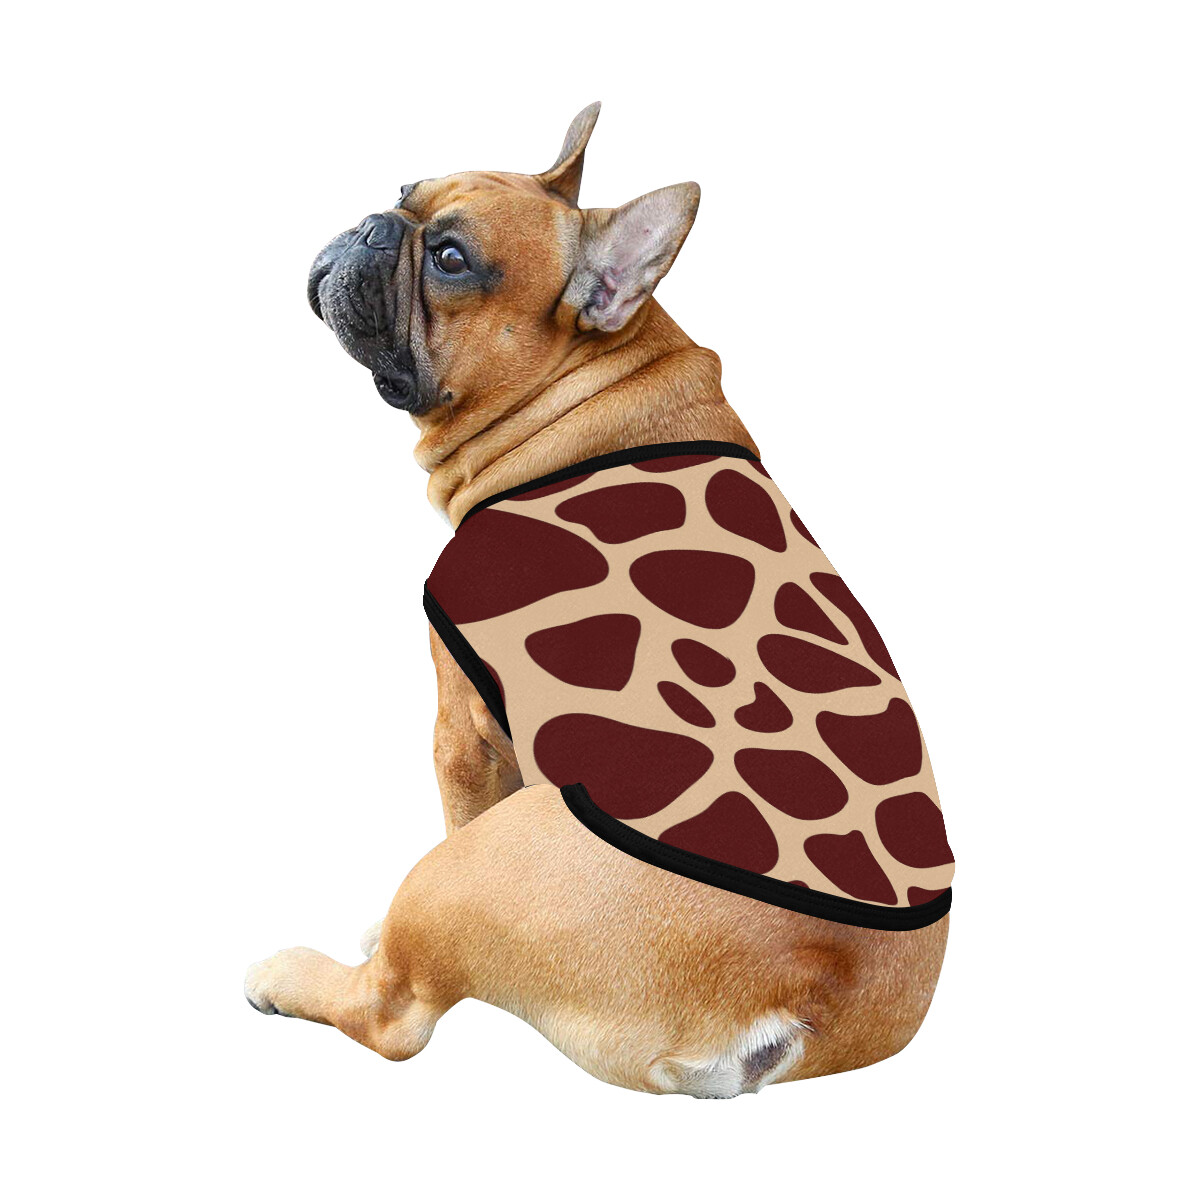 🐕 Animal print Giraffe Dog Tank Top, Dog shirt, Dog clothes, Gifts, front back print, 7 sizes XS to 3XL, dog t-shirt, dog gift